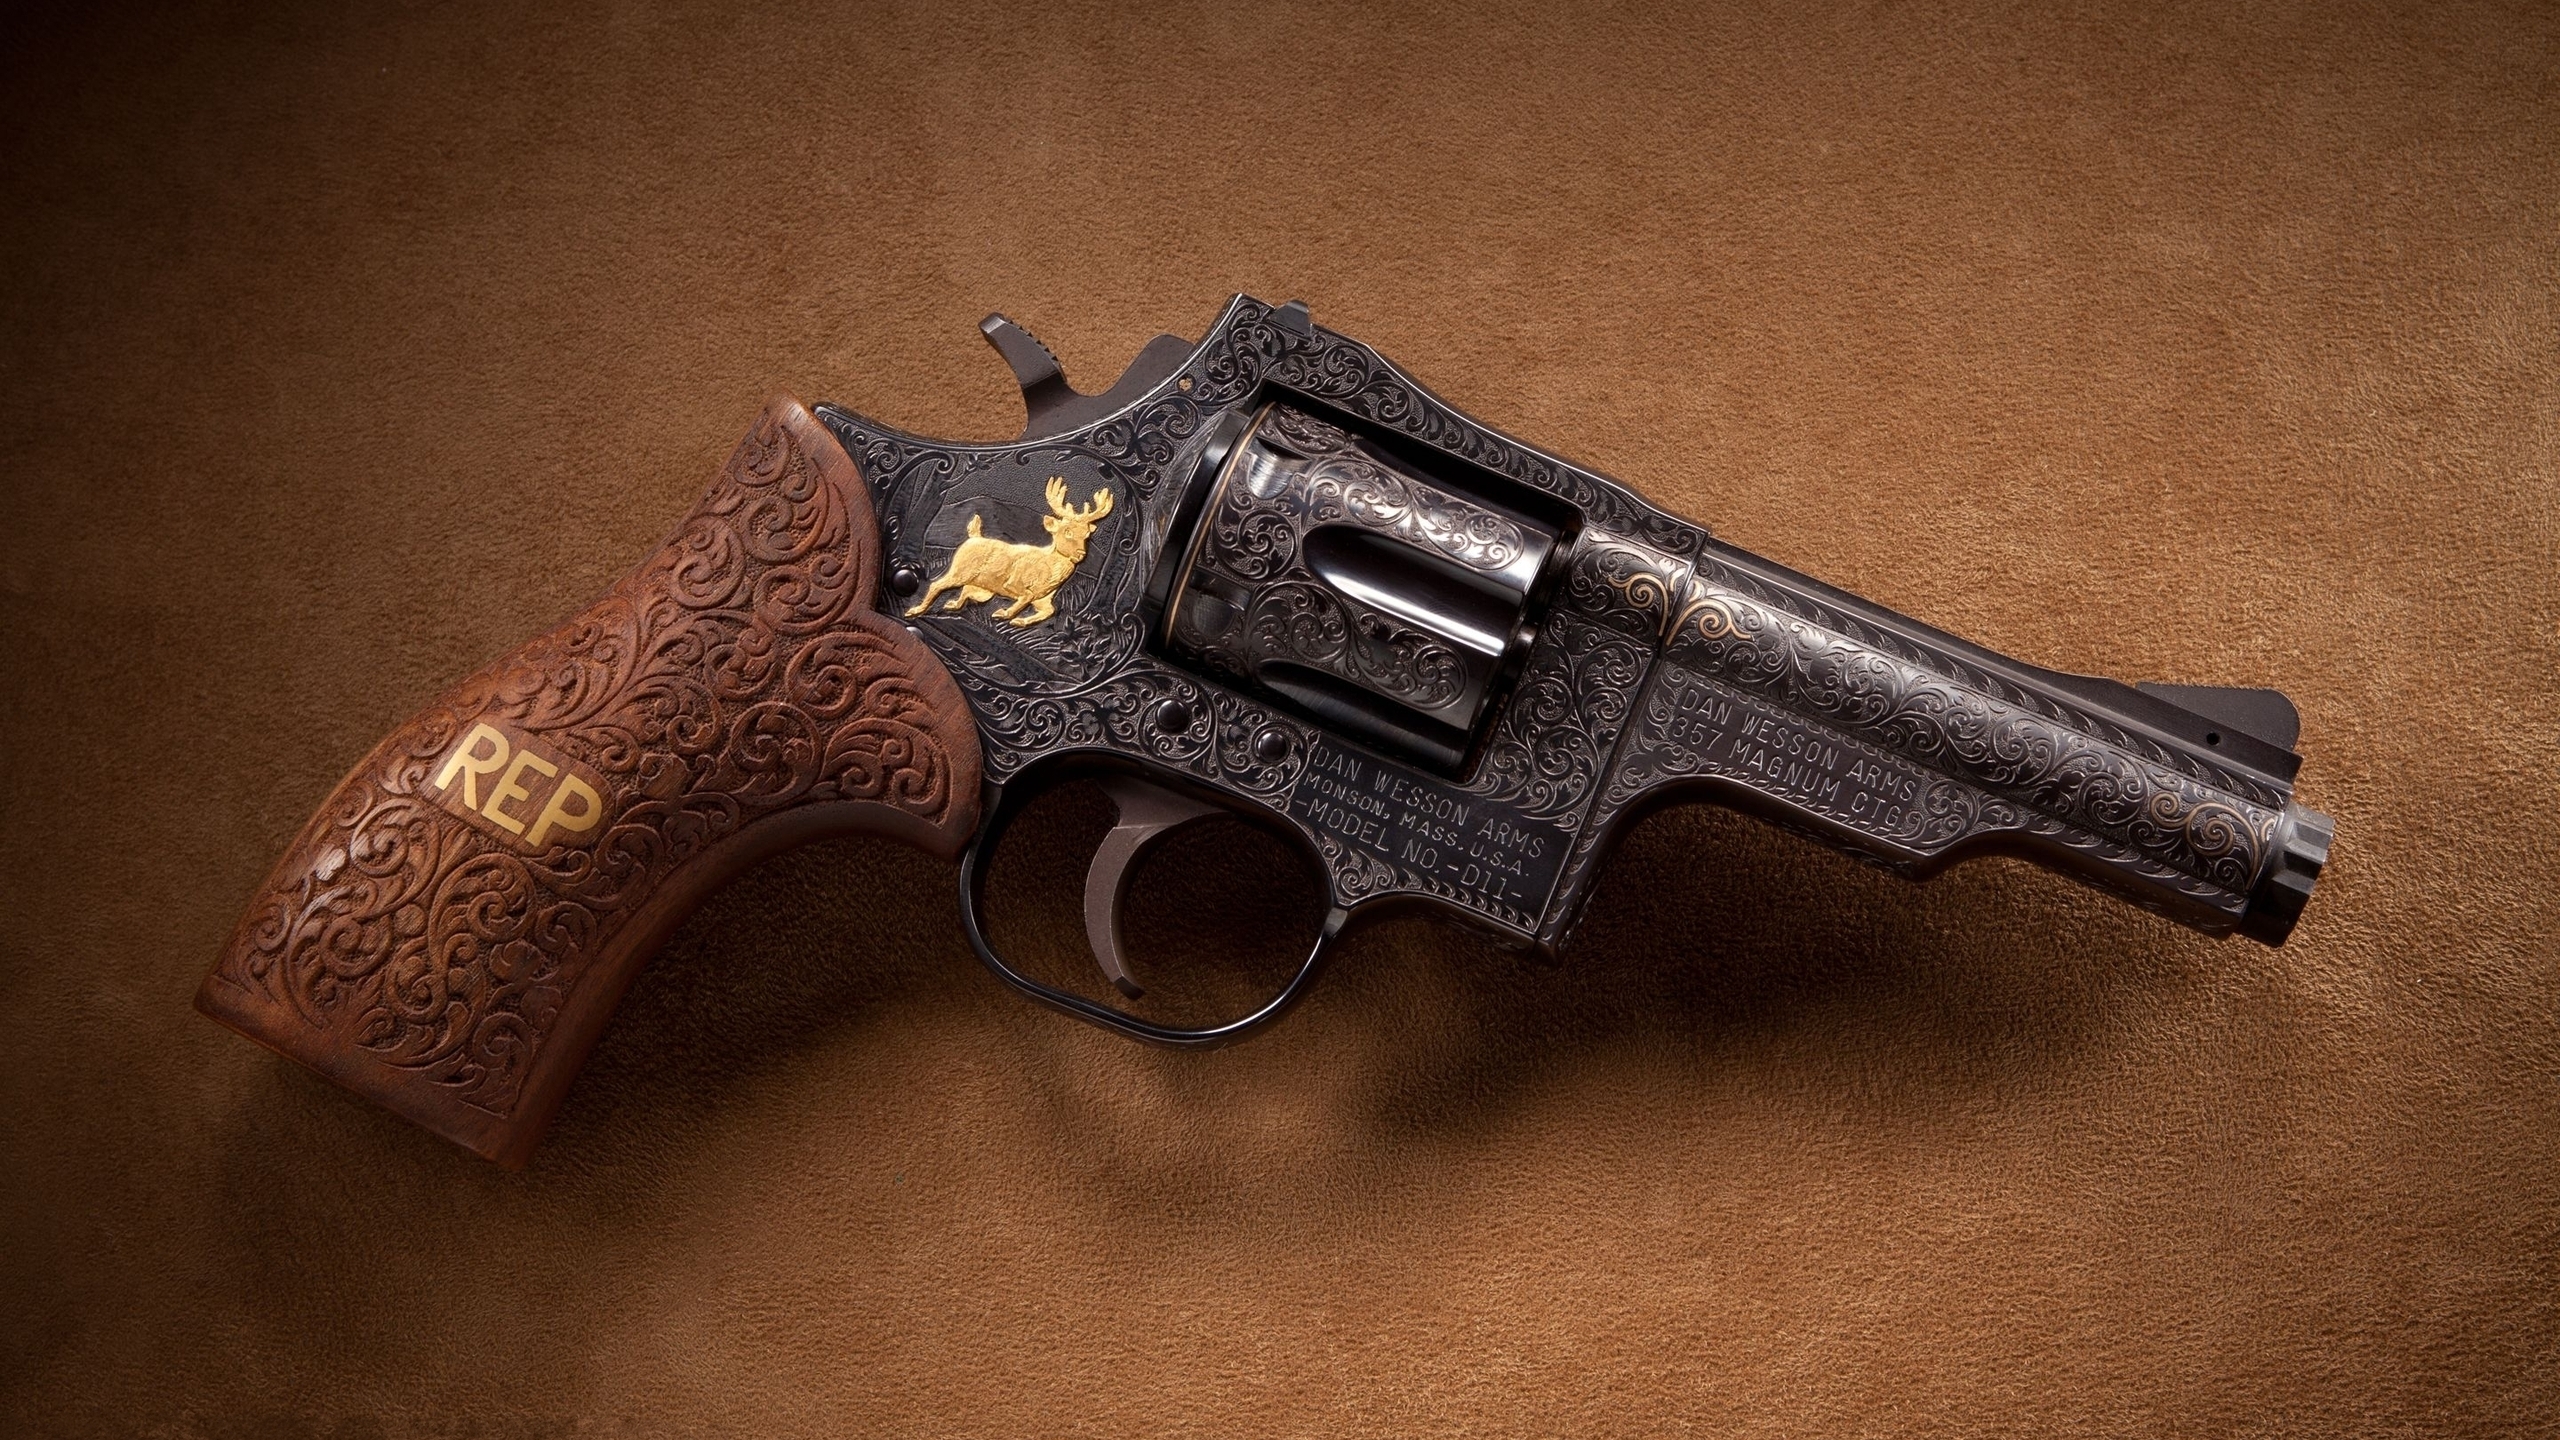 Magnum Revolver Wesson D11 for 2560x1440 HDTV resolution